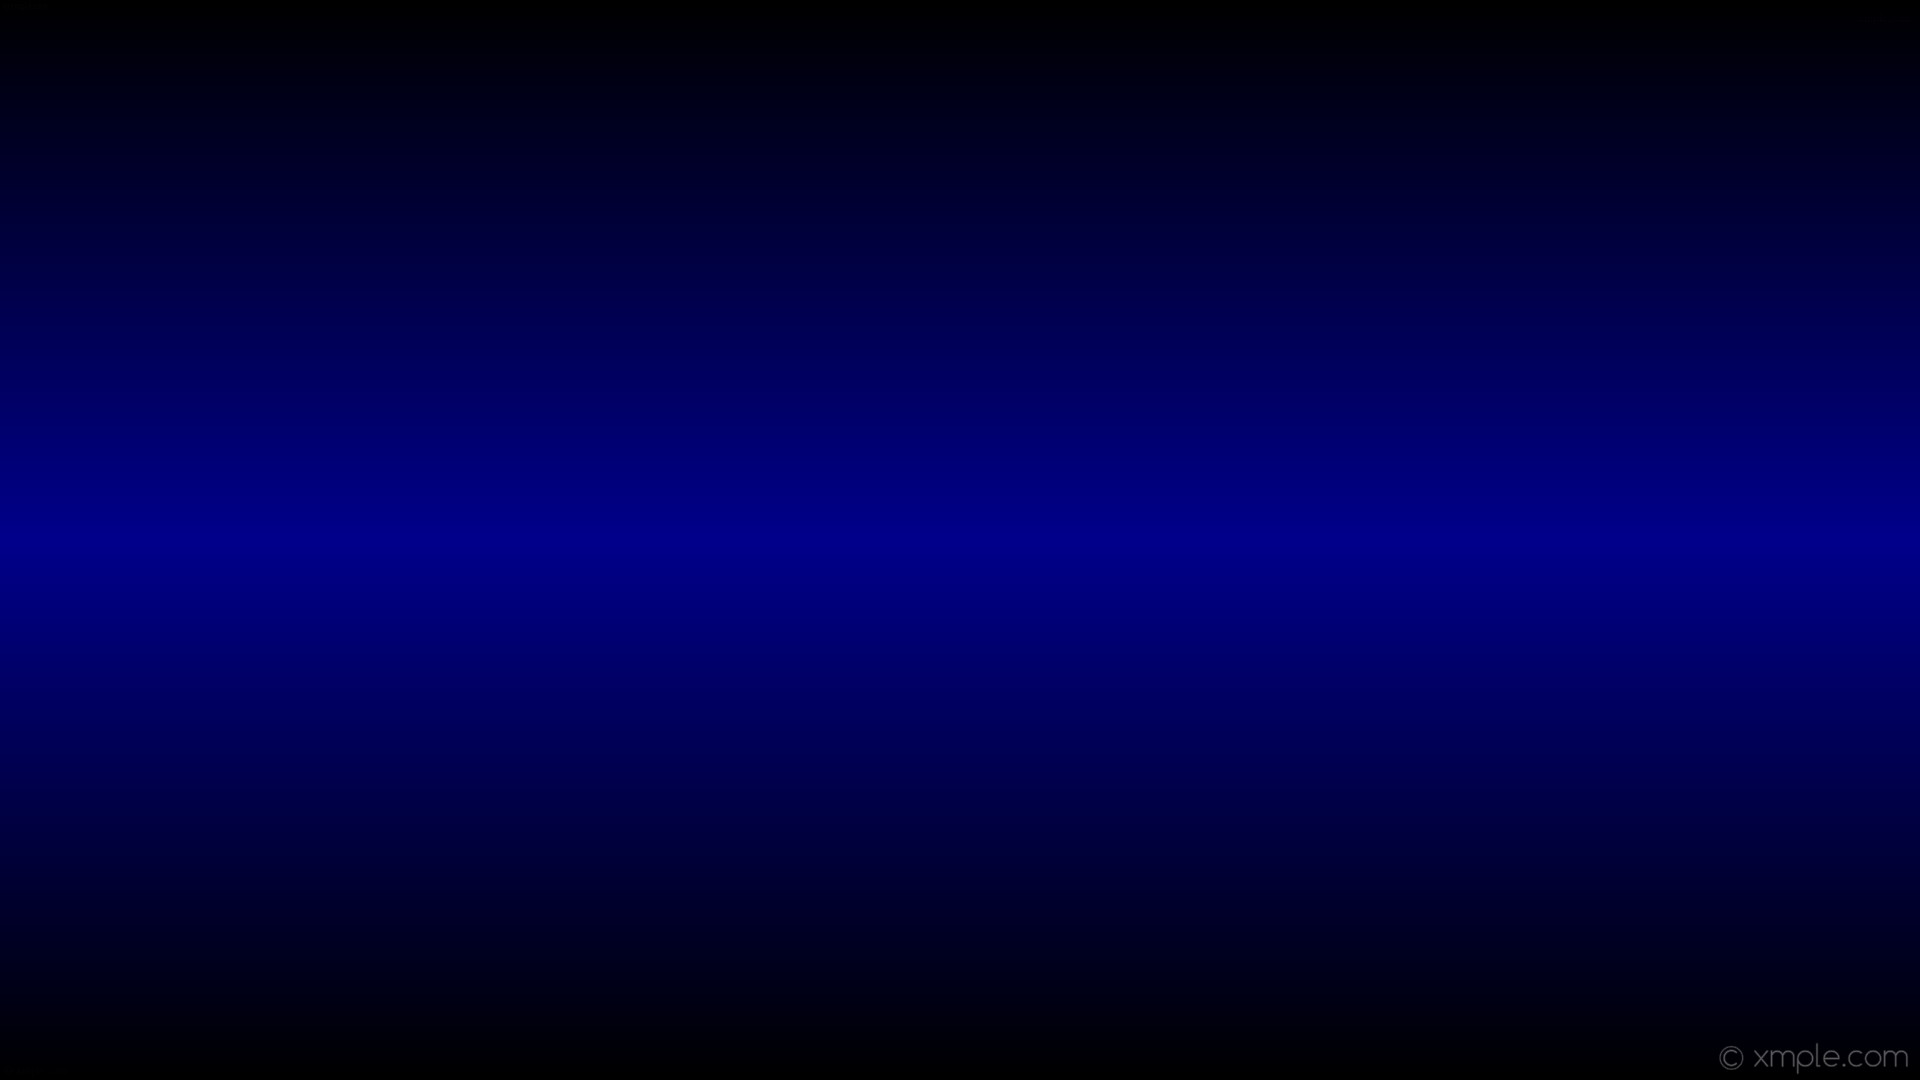 wallpaper linear black highlight blue gradient dark blue #000000 #00008b  270Â° 50%